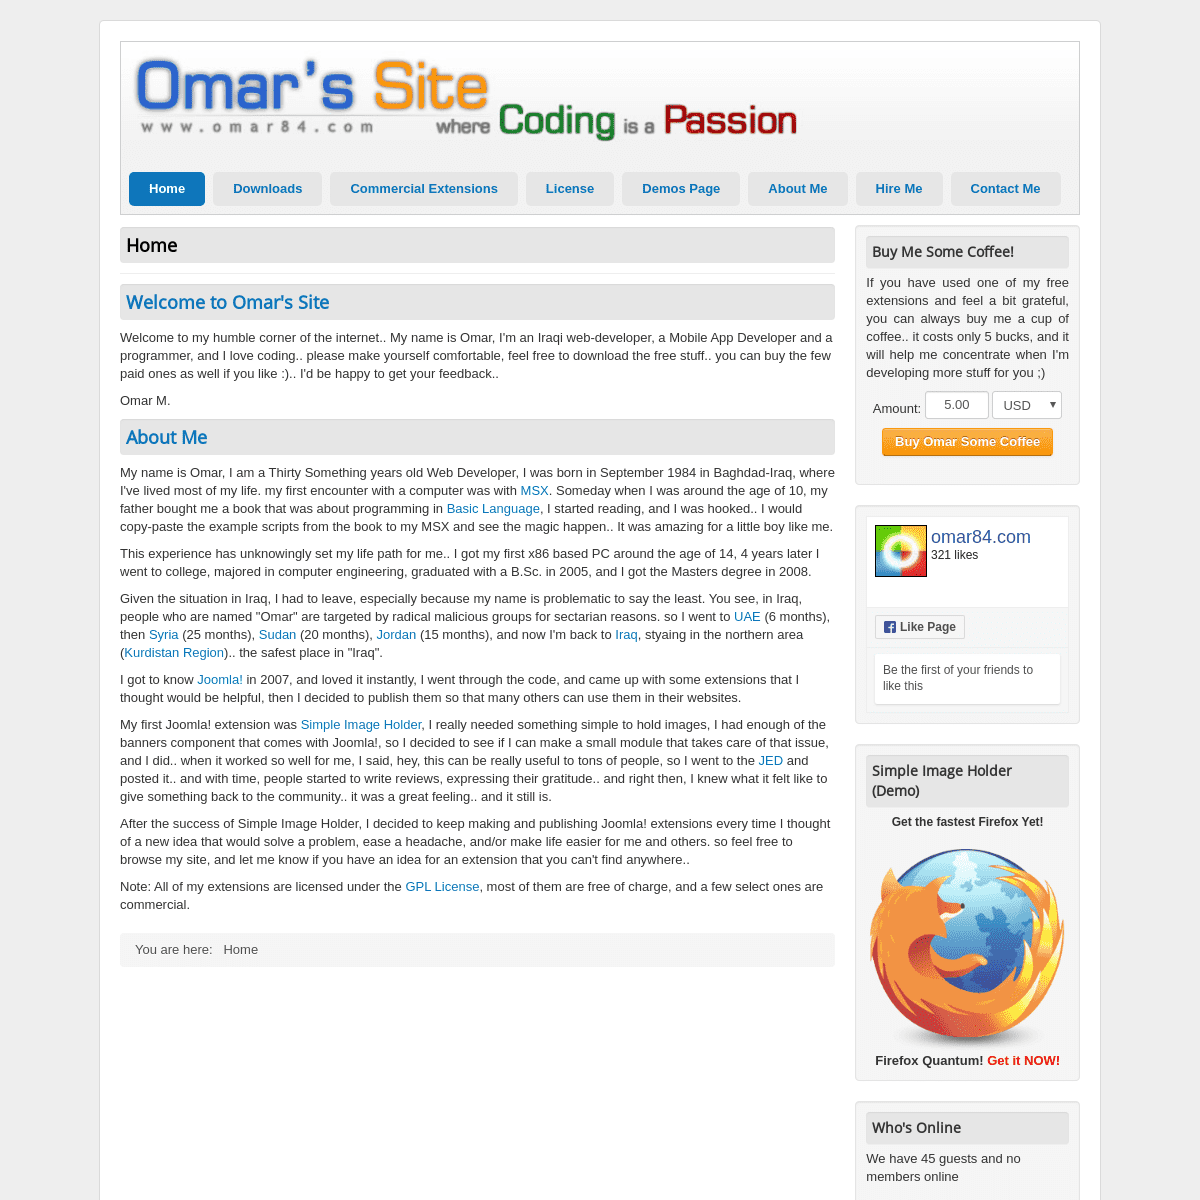 A complete backup of omar84.com